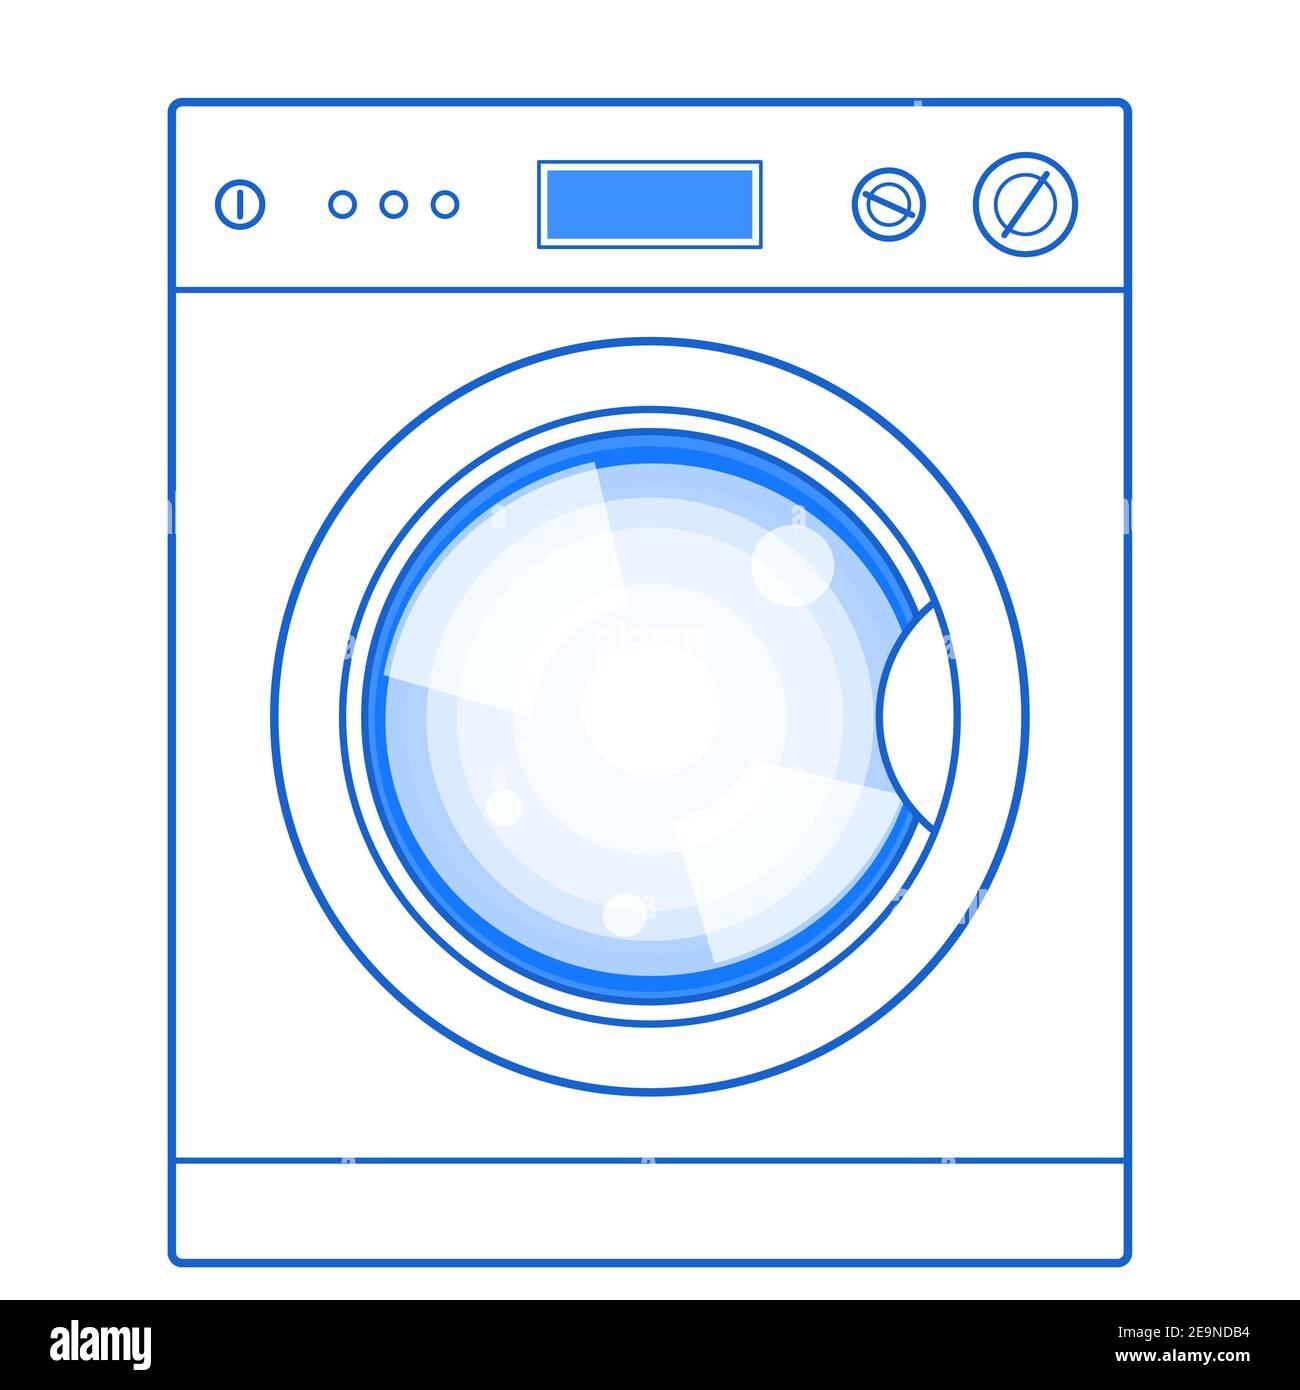 Illustration of the washing machine Stock Vector